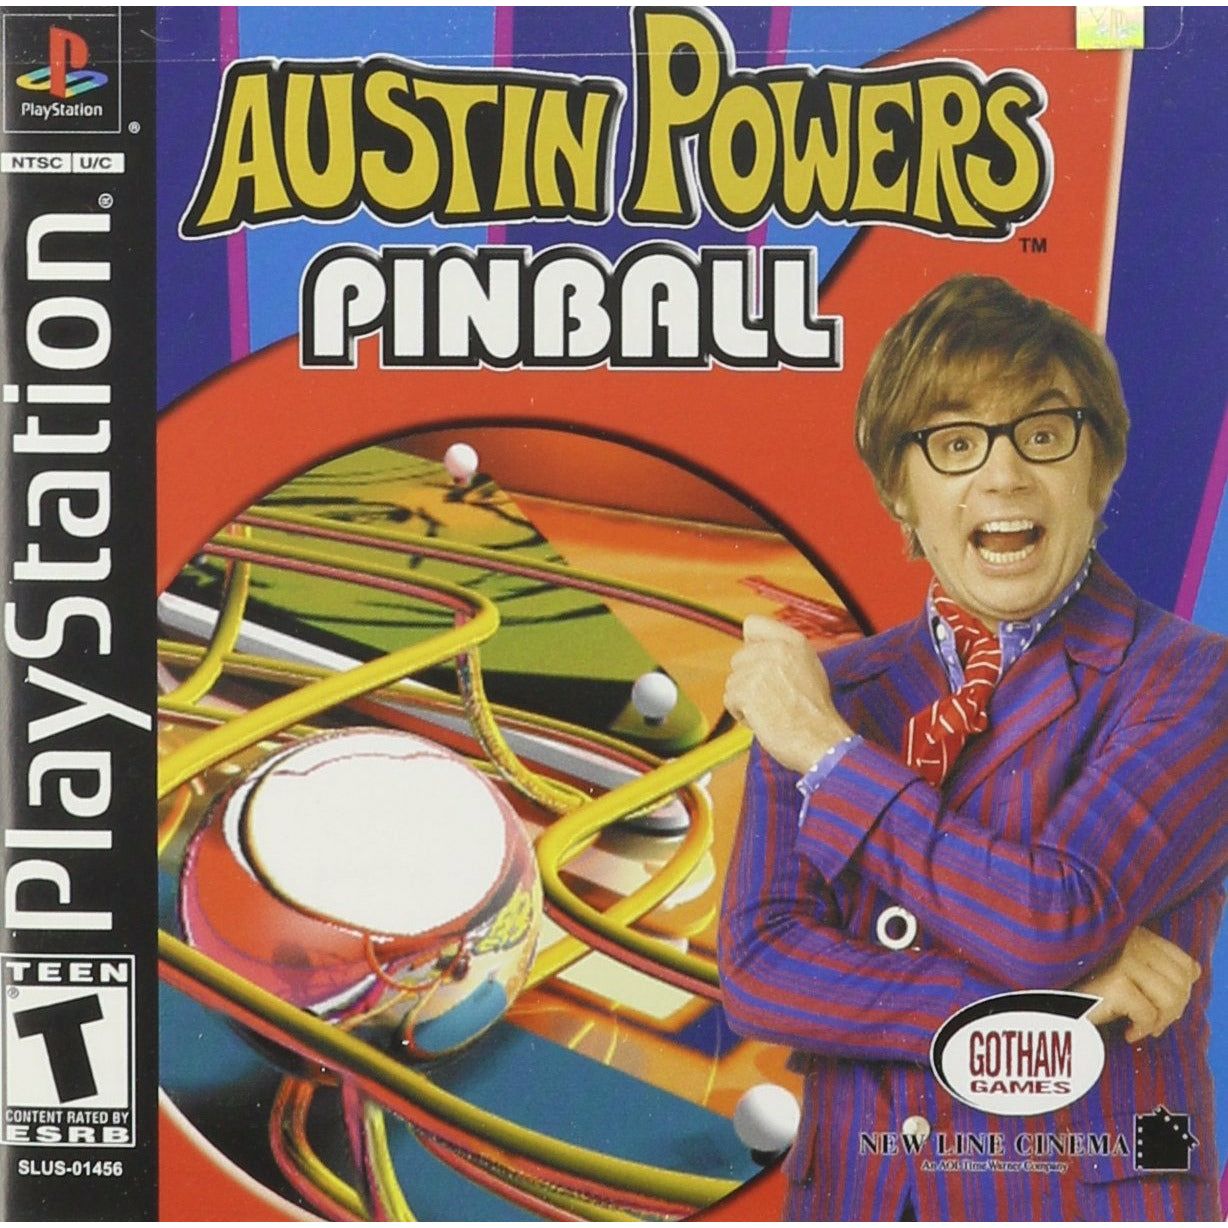 PS1 - Austin Powers Pinball